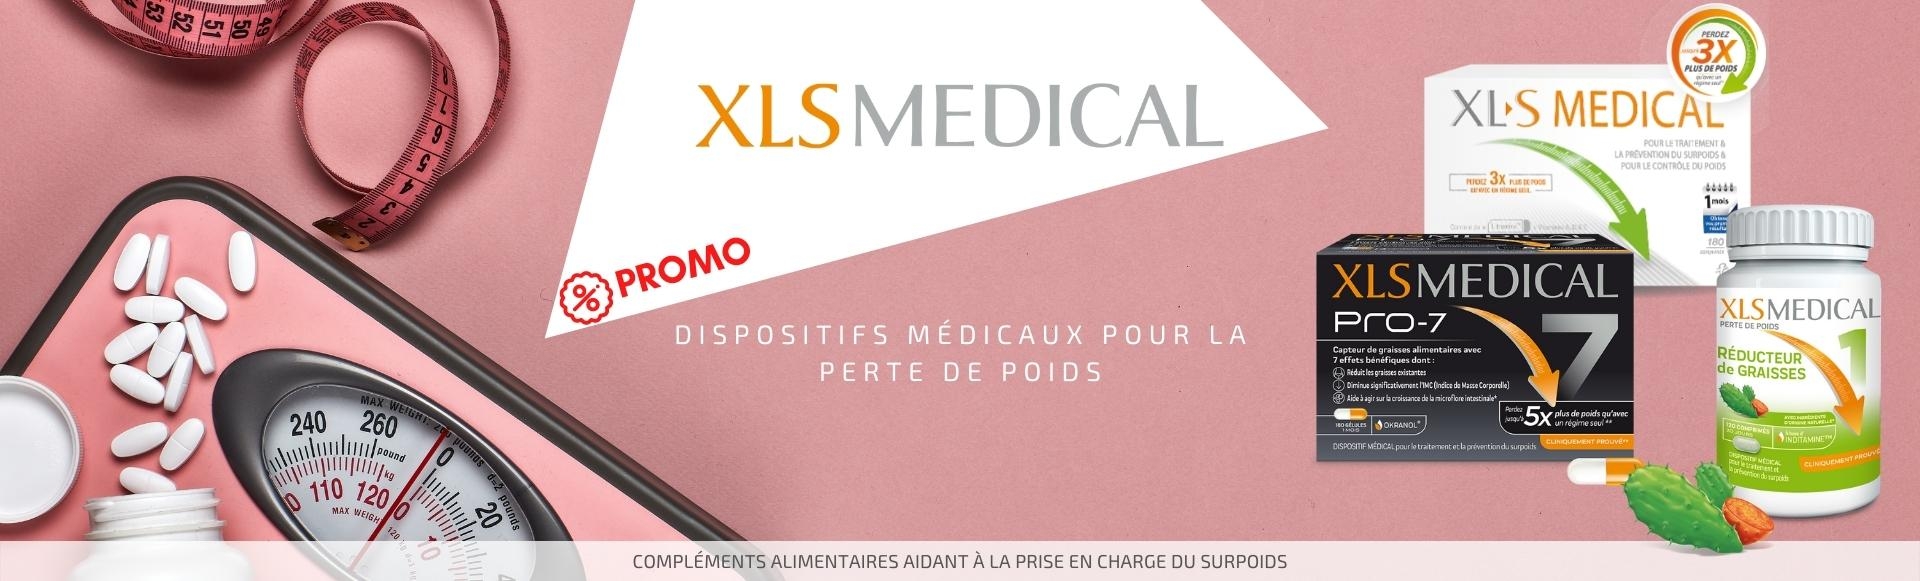 XLS-promo